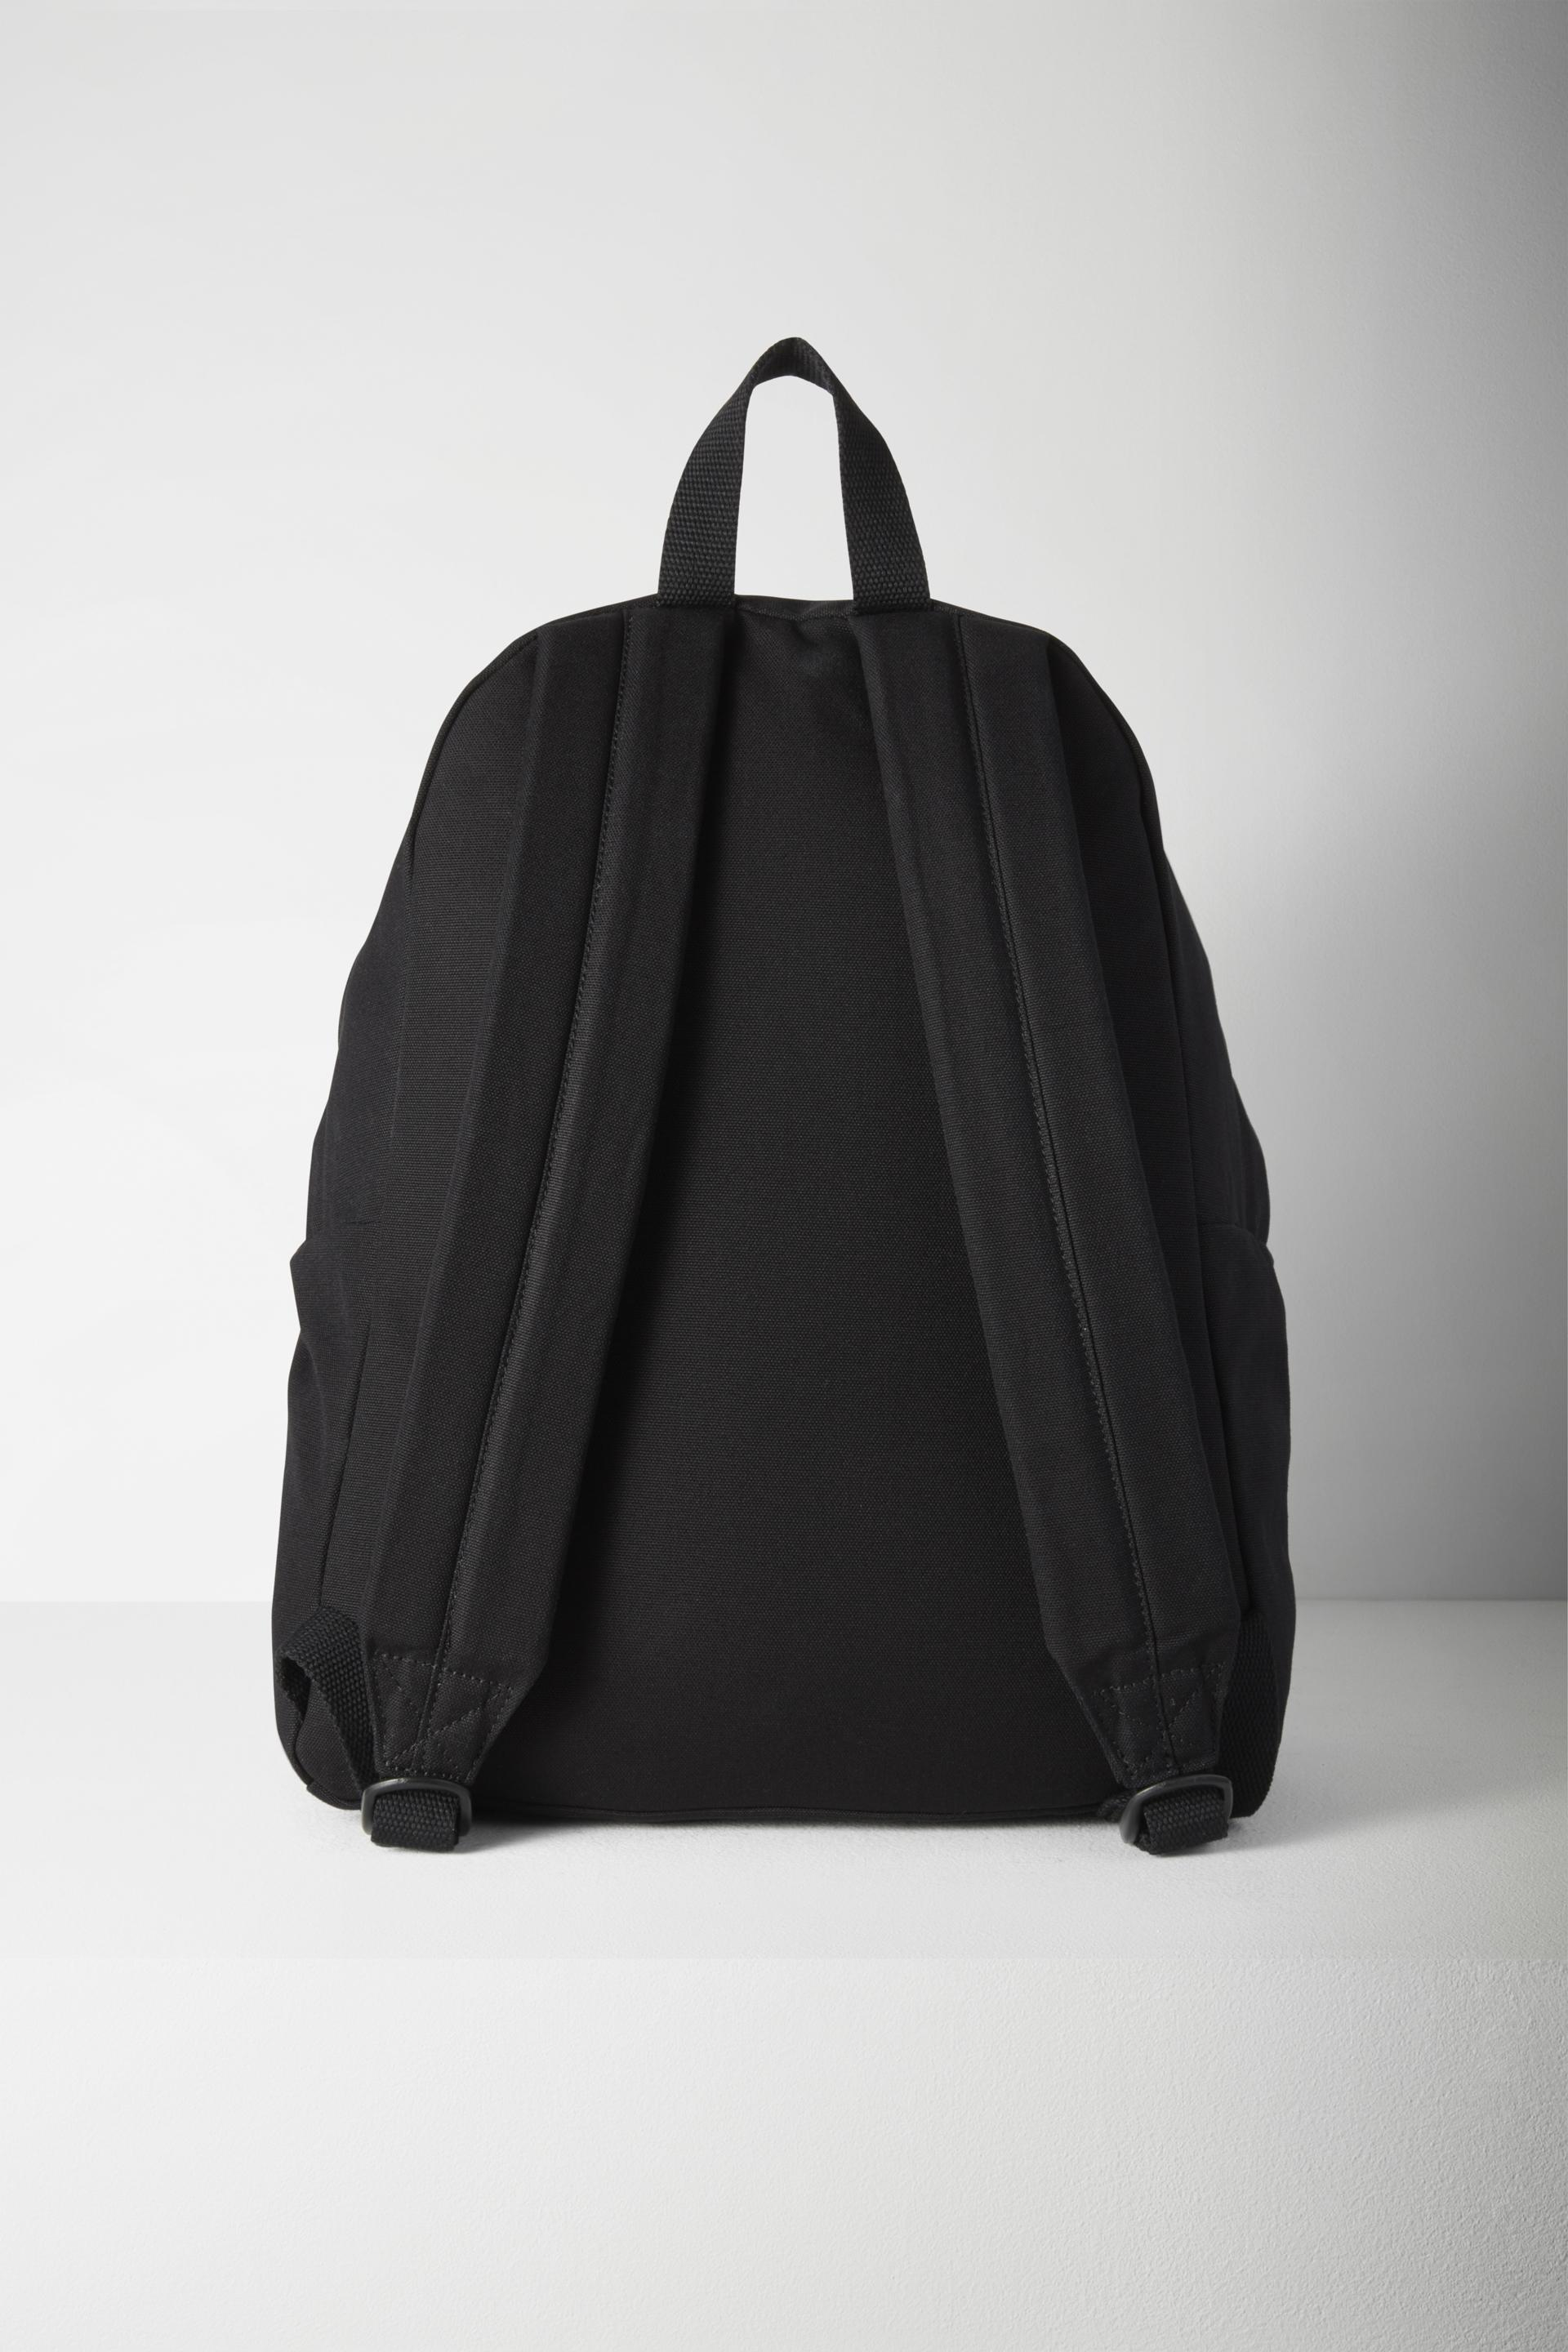 Lyst - Rag & Bone Standard Backpack in Black for Men